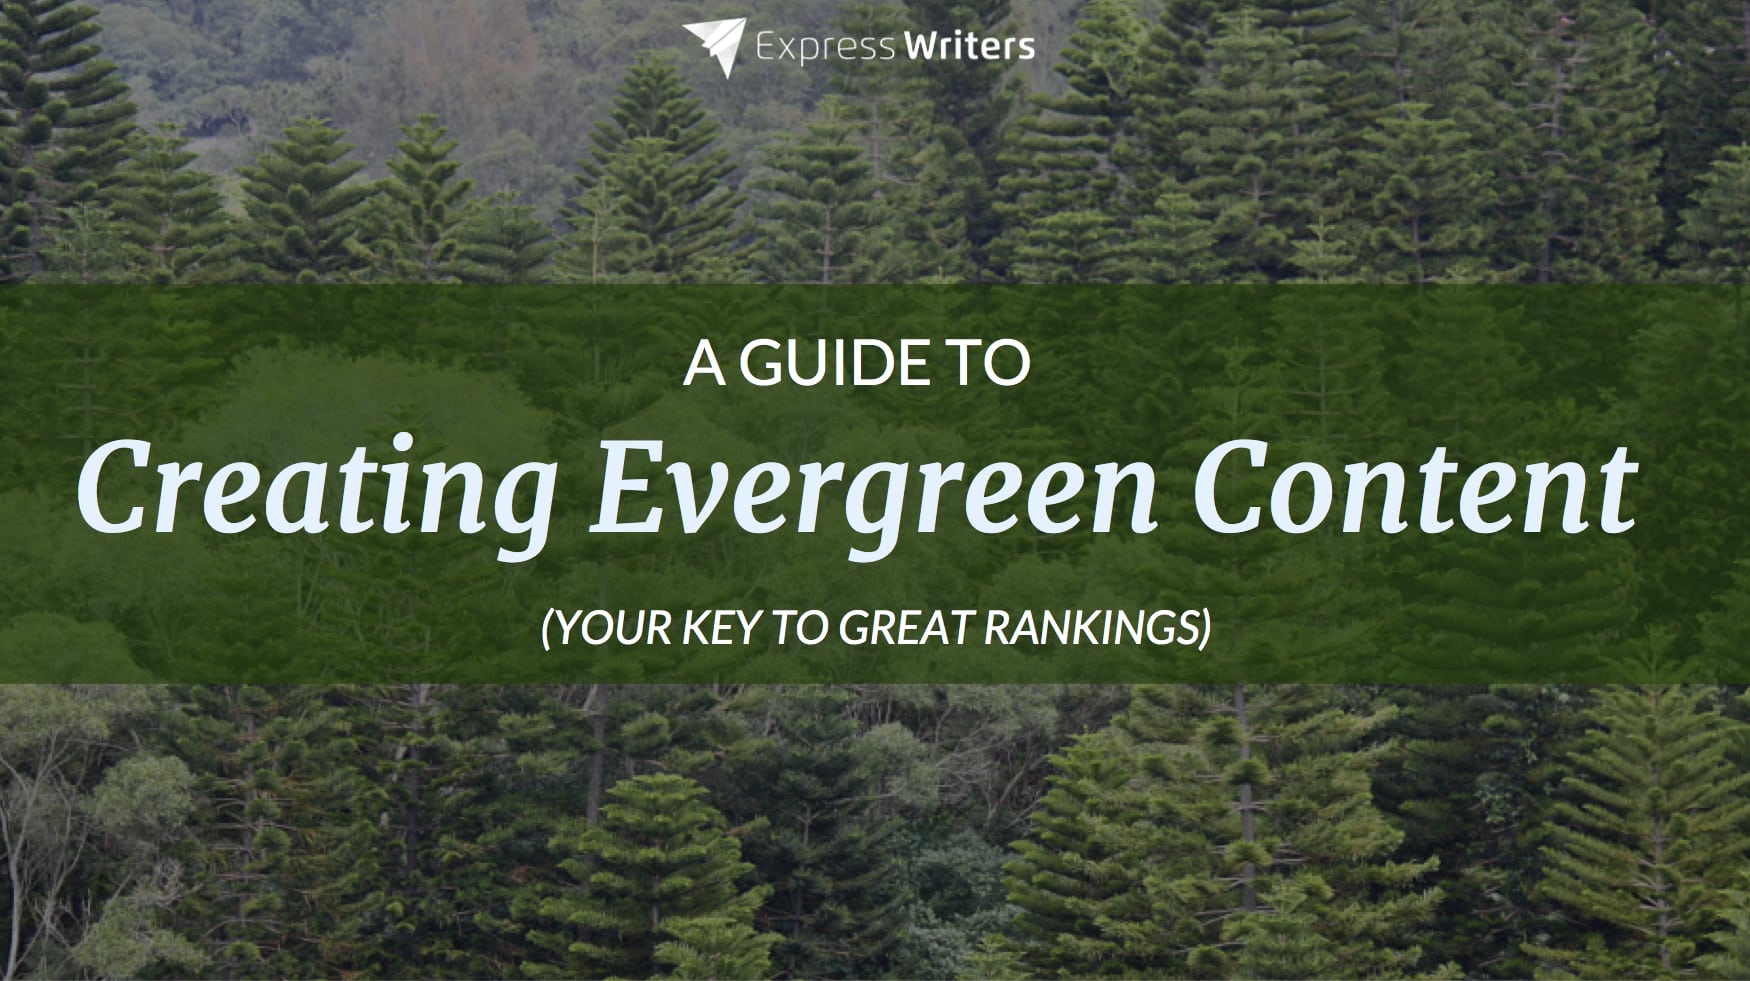 Evergreen permission originally lasts